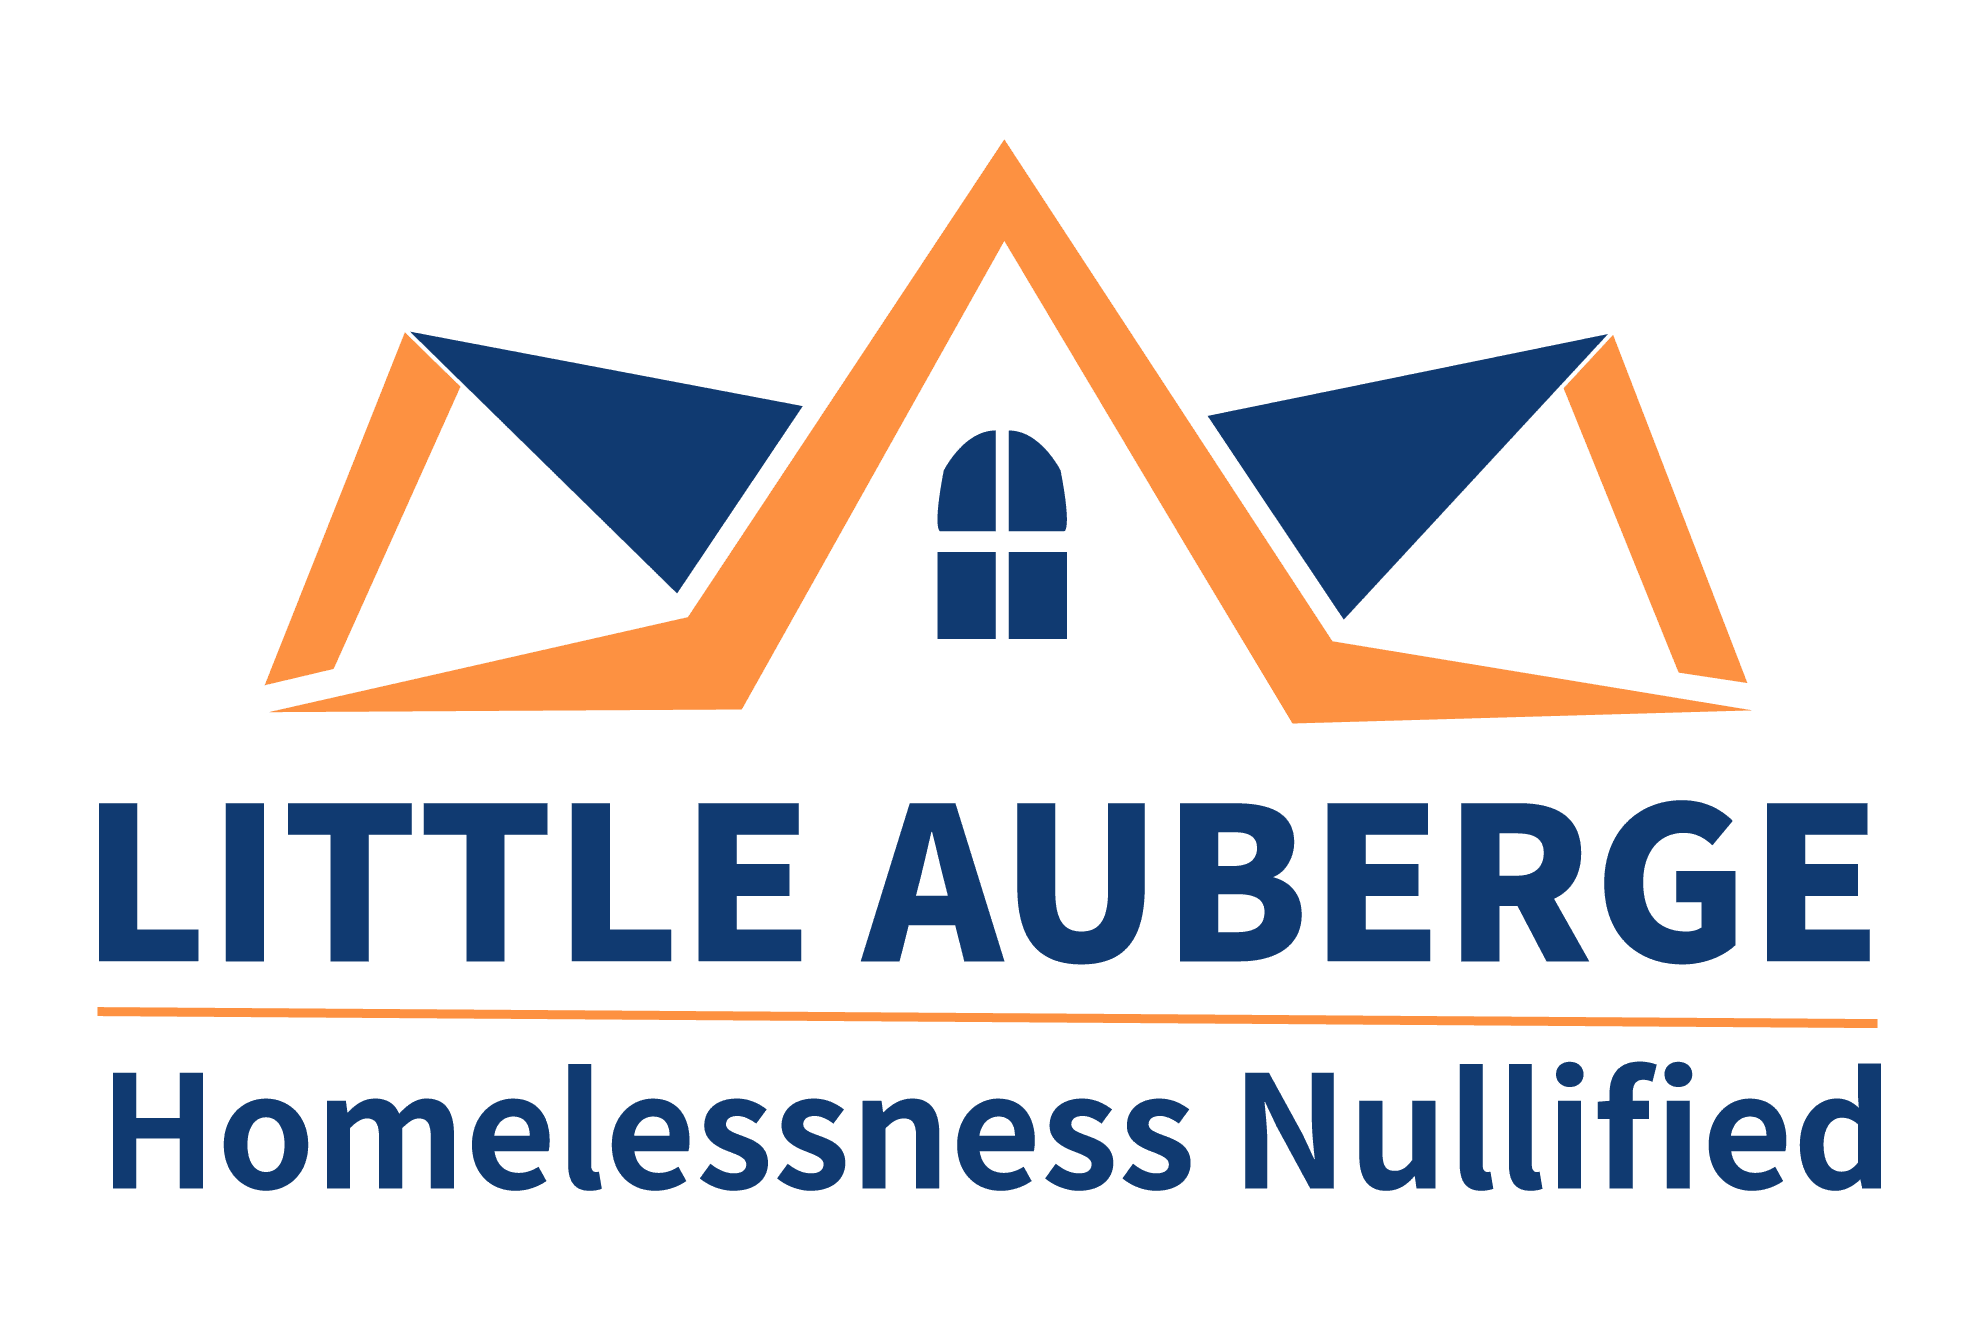 Little Auberge Foundation, Inc.